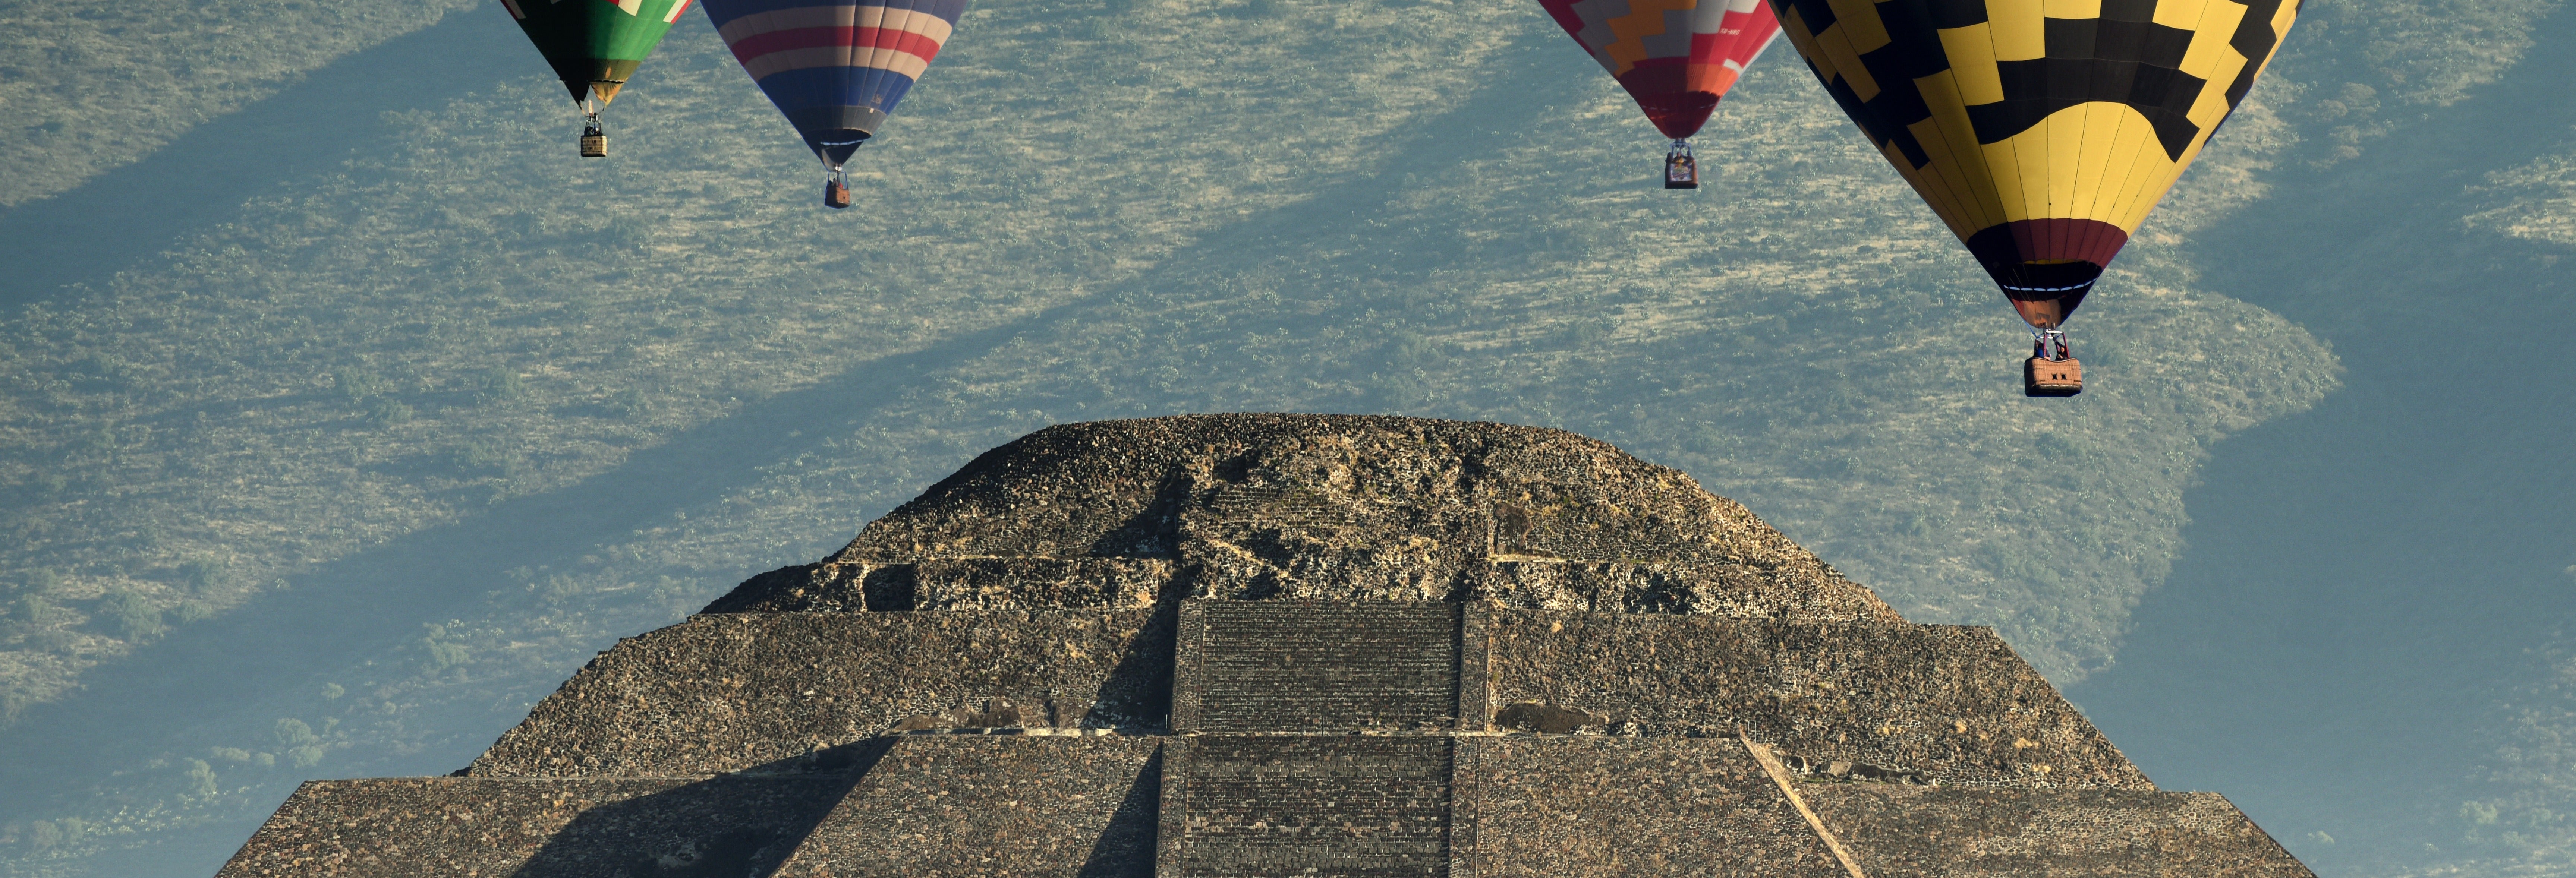 Passeio de balão sobre Teotihuacán